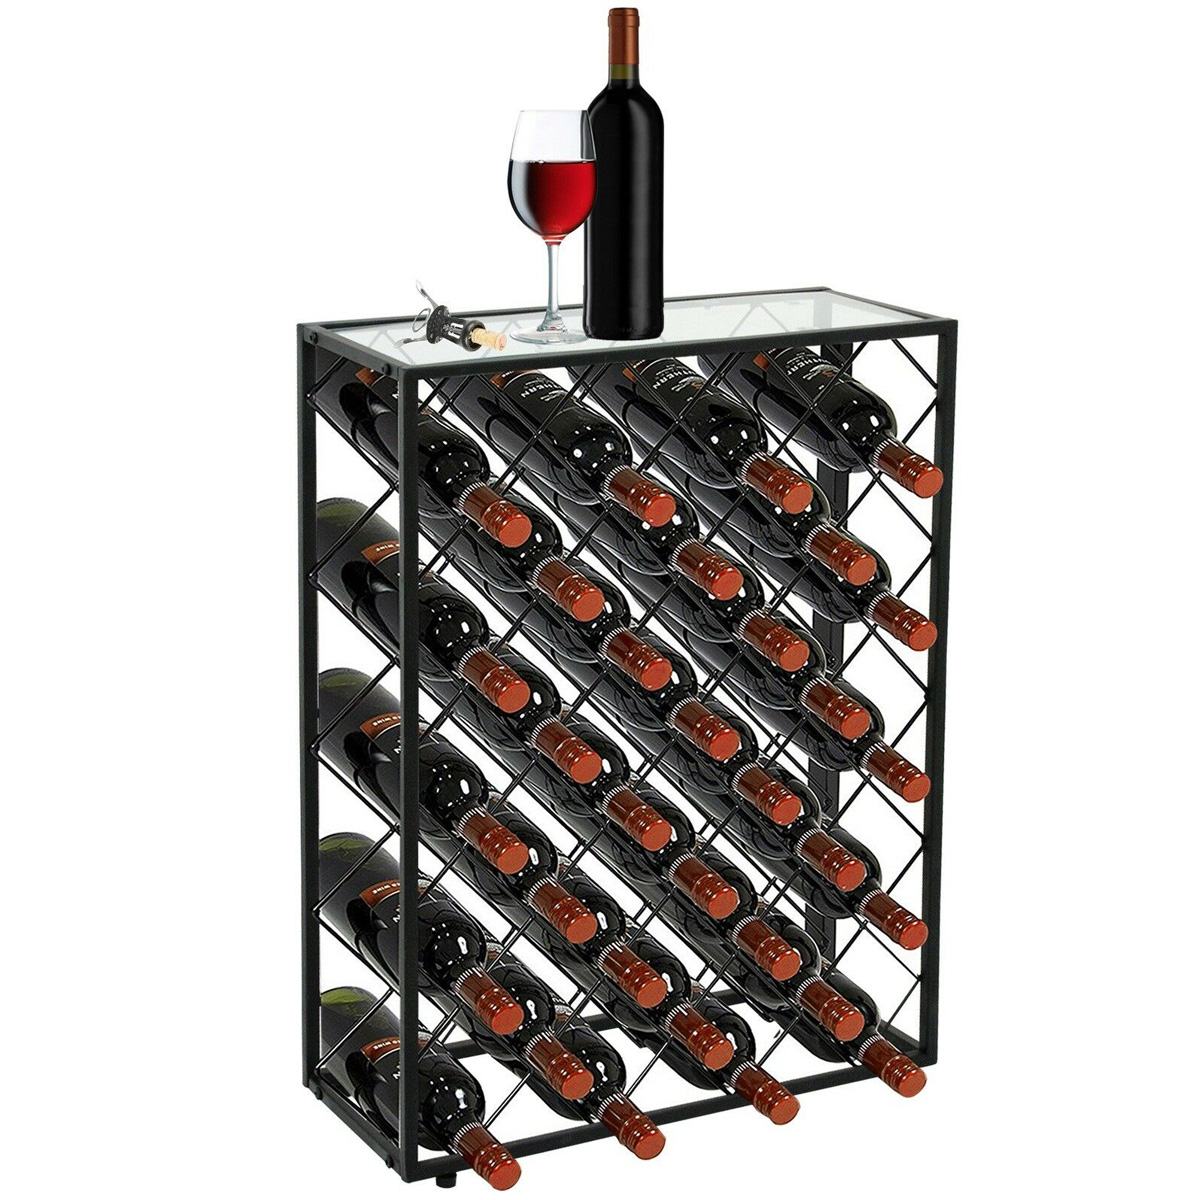 2 Sizes 23/32 Slots stainless Steel Wine Racks Bottle Cabinet Stand Holders Acrylic Steel Display Rack Shelf Organizer Storage